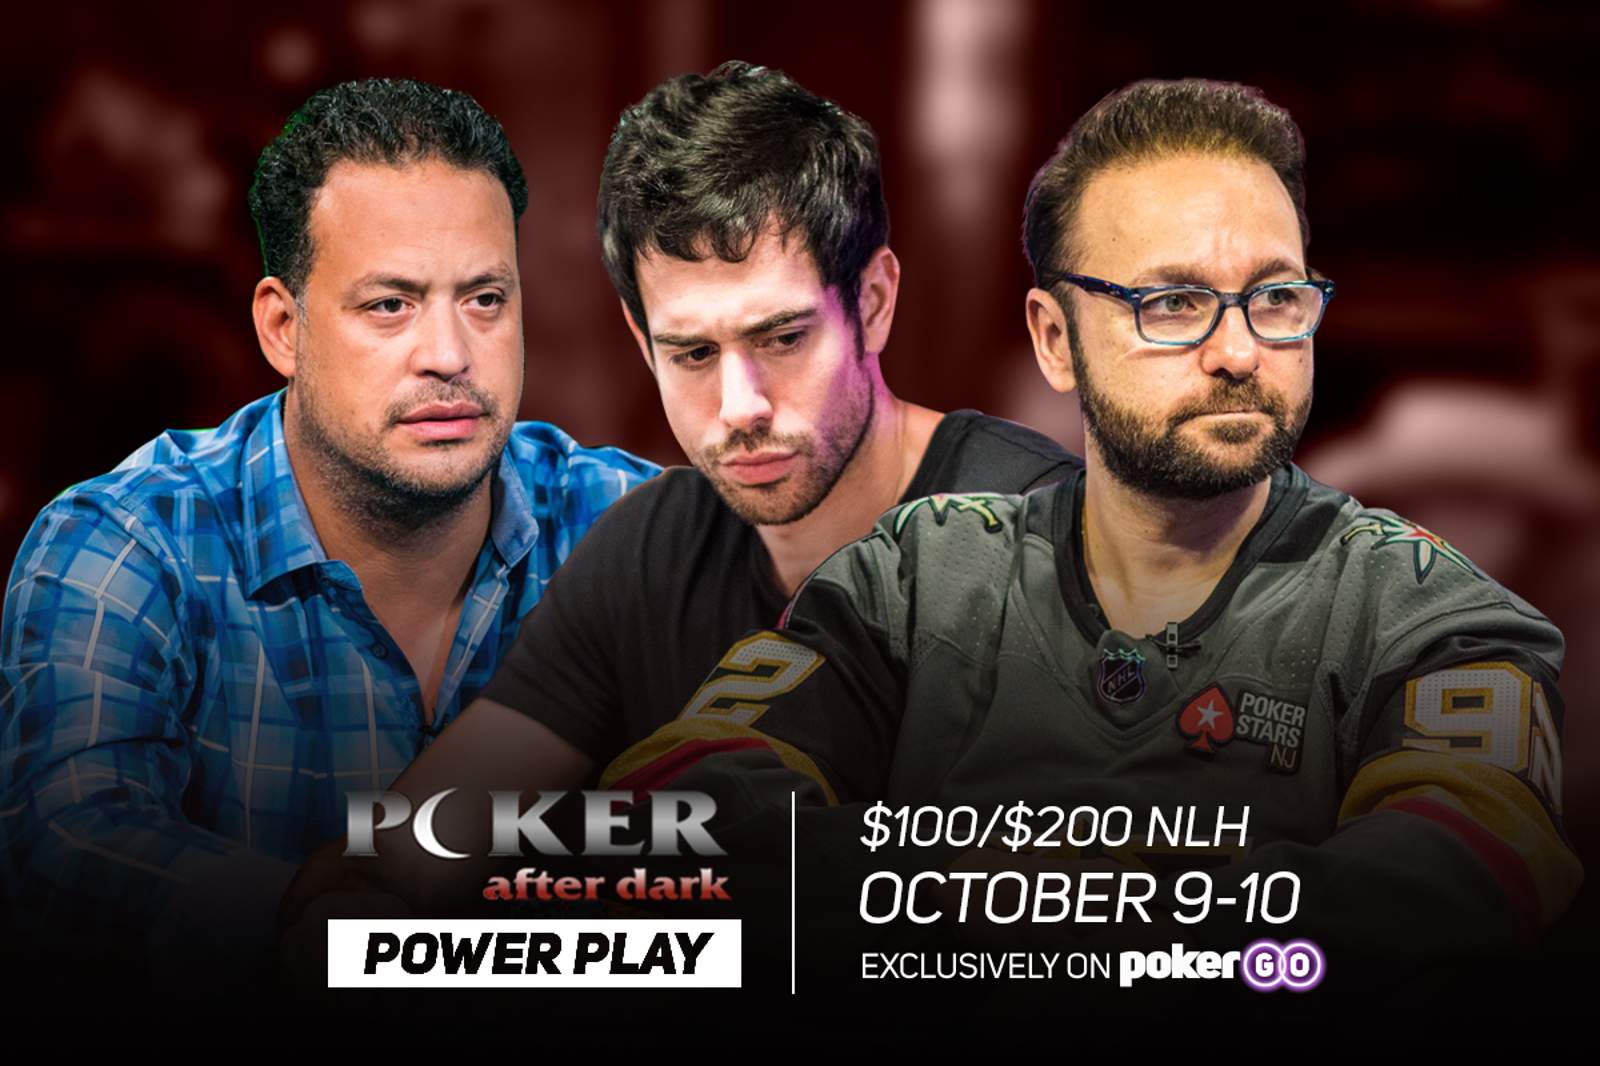 Daniel Negreanu Headlines "Power Play" Week on "Poker After Dark"